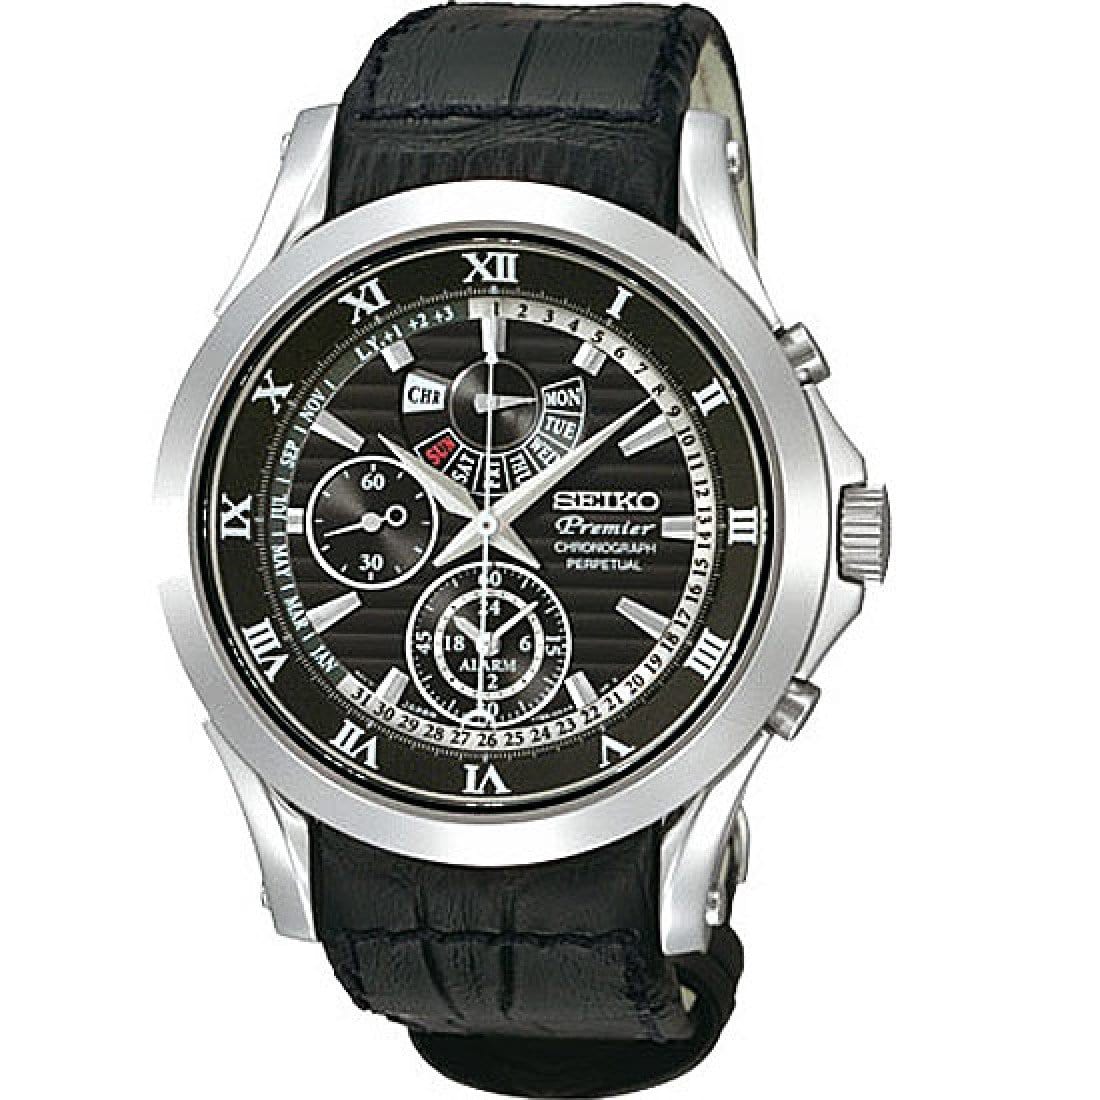 Seiko Premier Chronograph Perpetual Watch SPC053P1 SPC053